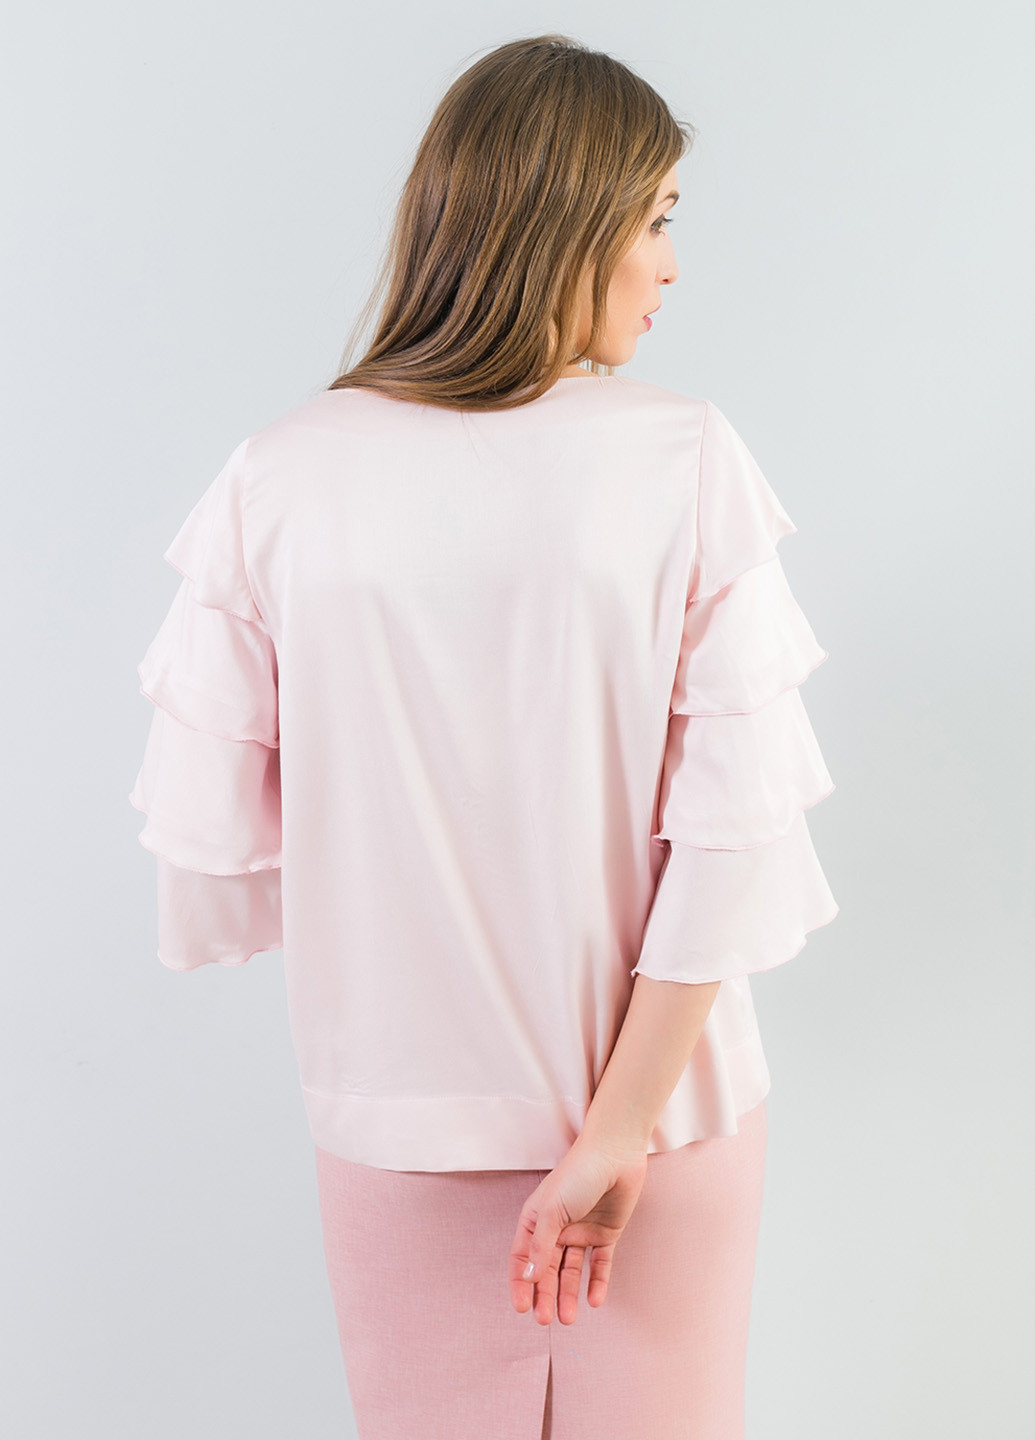 Бледно-розовая демисезонная блуза Jhiva